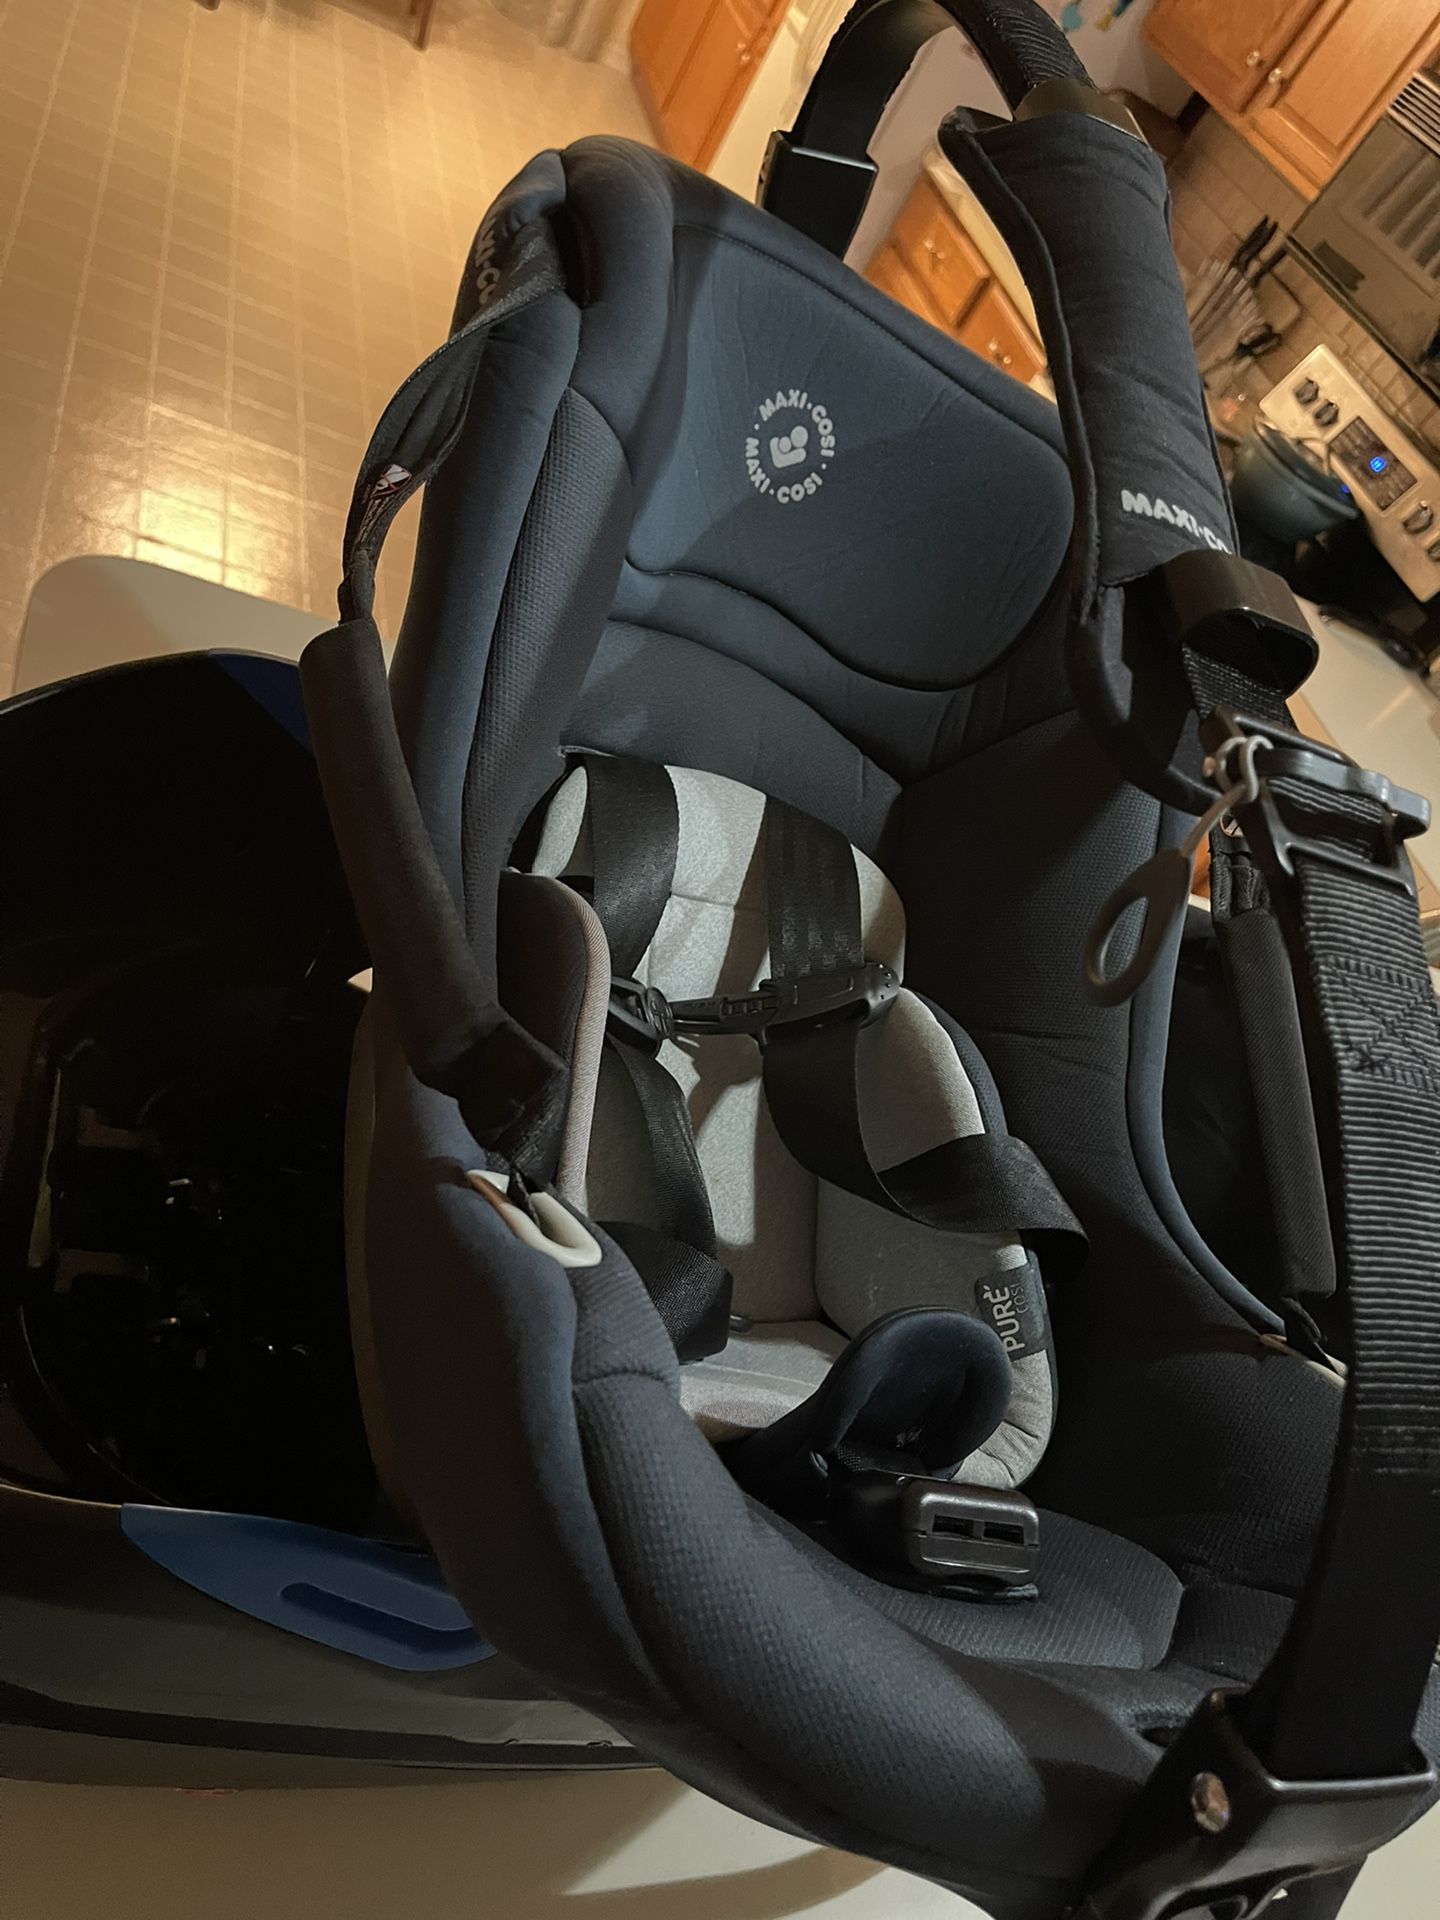 Maxi Cosi Coral XP Infant Car Seat